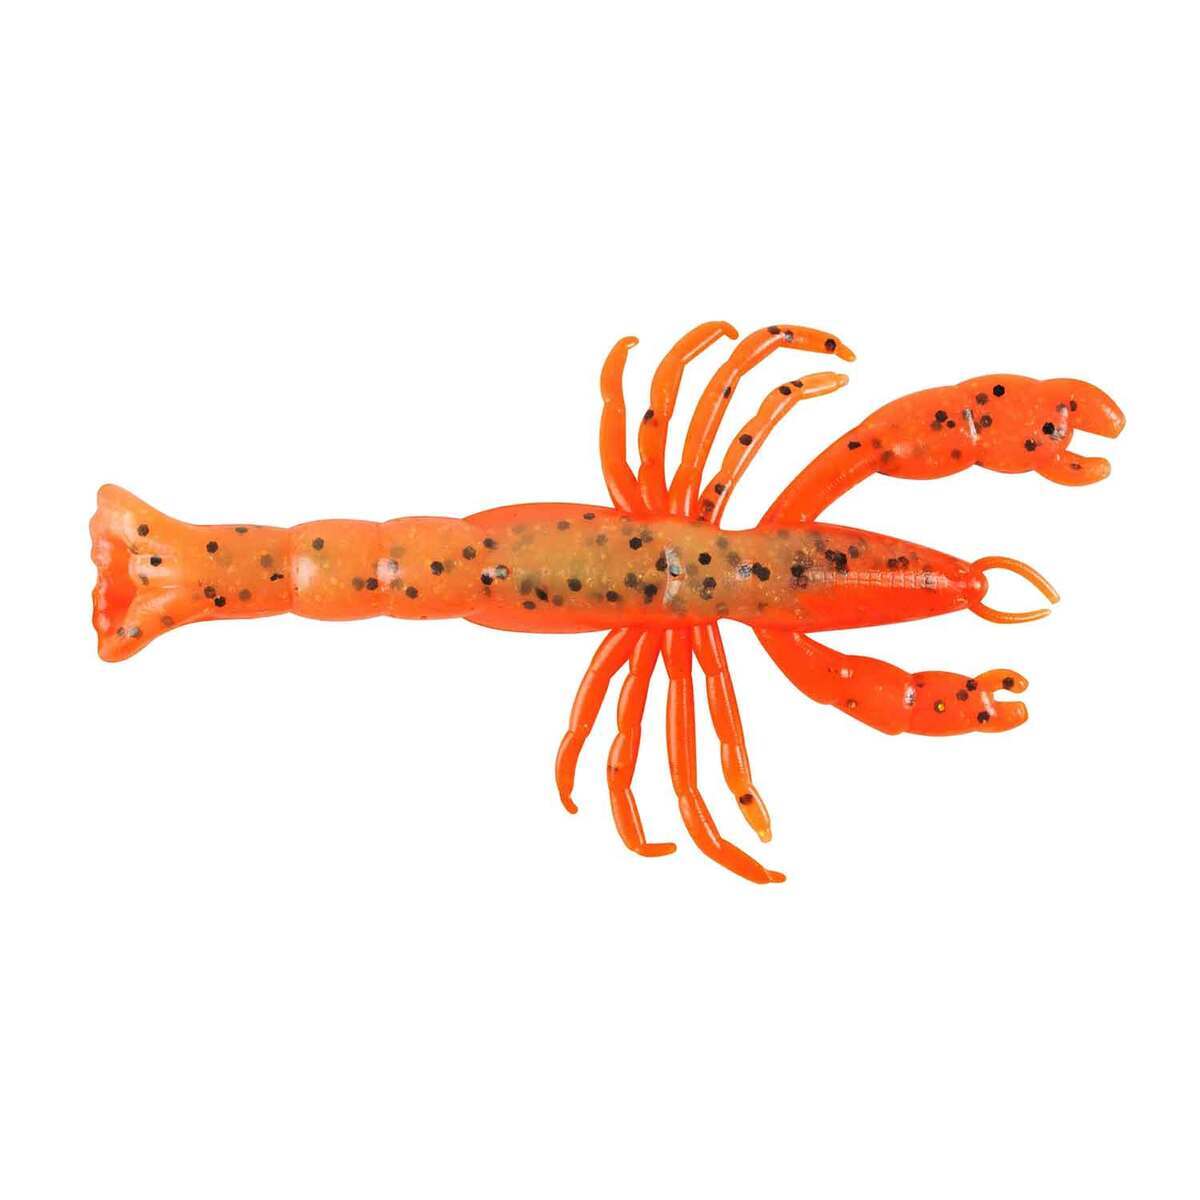 https://www.sportsmans.com/medias/berkley-gulp-ghost-shrimp-saltwater-soft-bait-orange-belly-3in-1236860-1.jpg?context=bWFzdGVyfGltYWdlc3w0NjcxOXxpbWFnZS9qcGVnfGFHWmlMMmhoWVM4eE1EVTNOelk1T0RFNU16UXpPQzh4TWpNMk9EWXdMVEZmWW1GelpTMWpiMjUyWlhKemFXOXVSbTl5YldGMFh6RXlNREF0WTI5dWRtVnljMmx2YmtadmNtMWhkQXxlMjAzM2MxNzhiMDY1YjRkMGIxZmUwZDI3MDExMzRlMGQ1MmEzMTUxODBjNTg1M2NlZmUyYTlmN2ZlYzdhMDQy